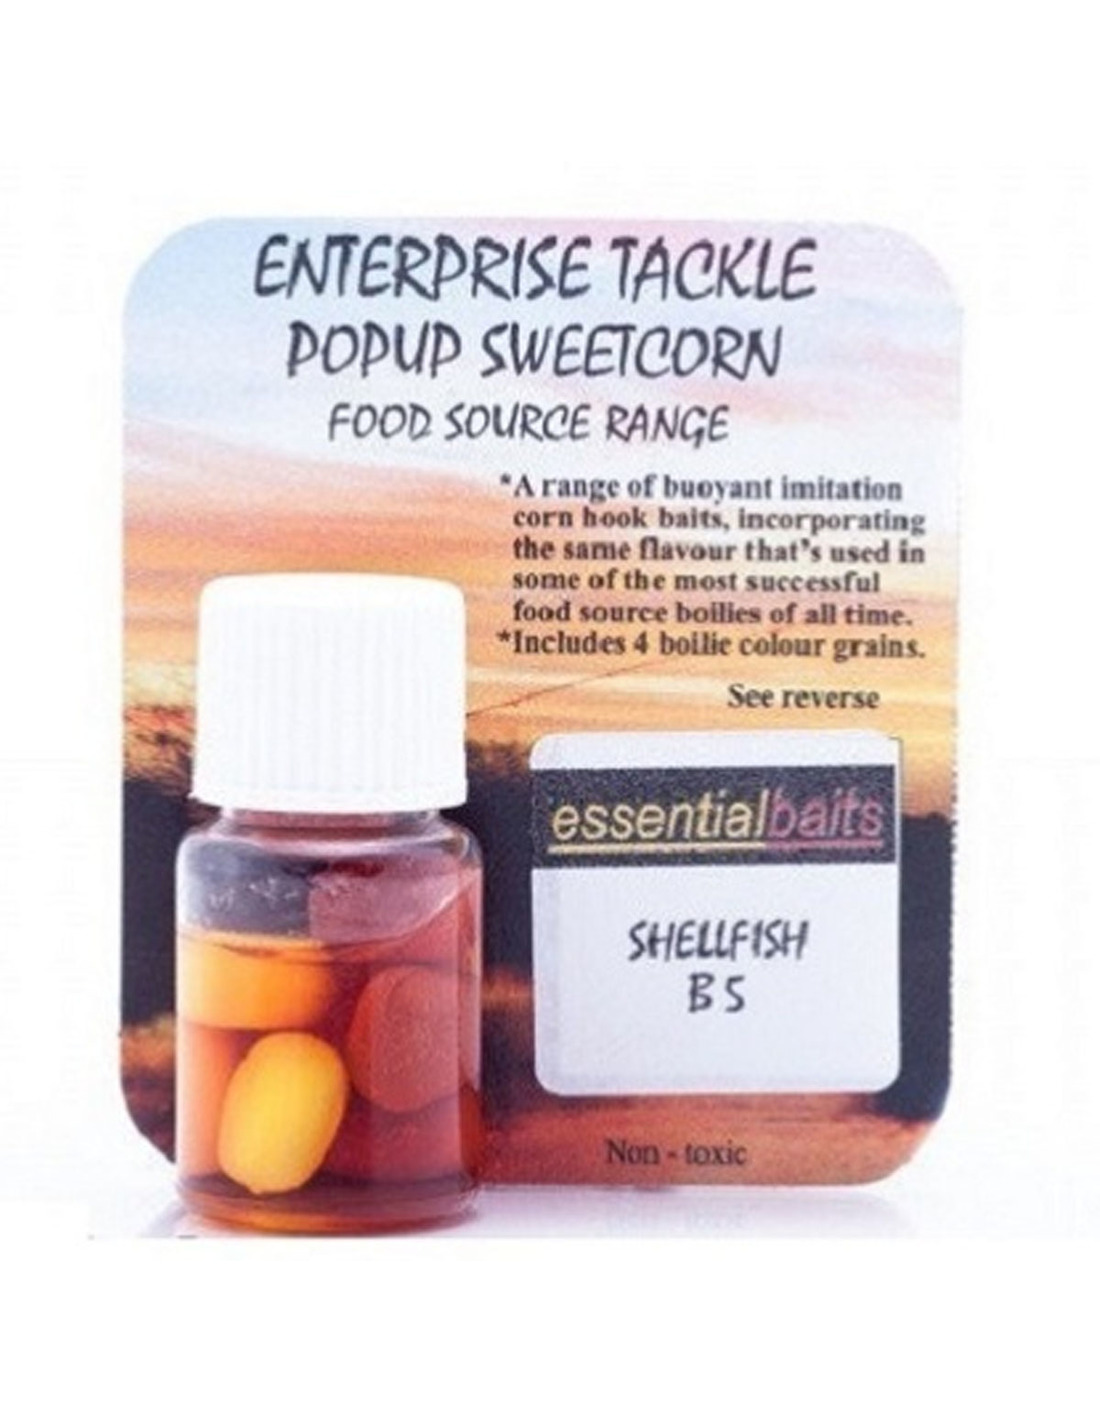 Pop Up Sweetcorn Essential baits ( Shellfish B5 )